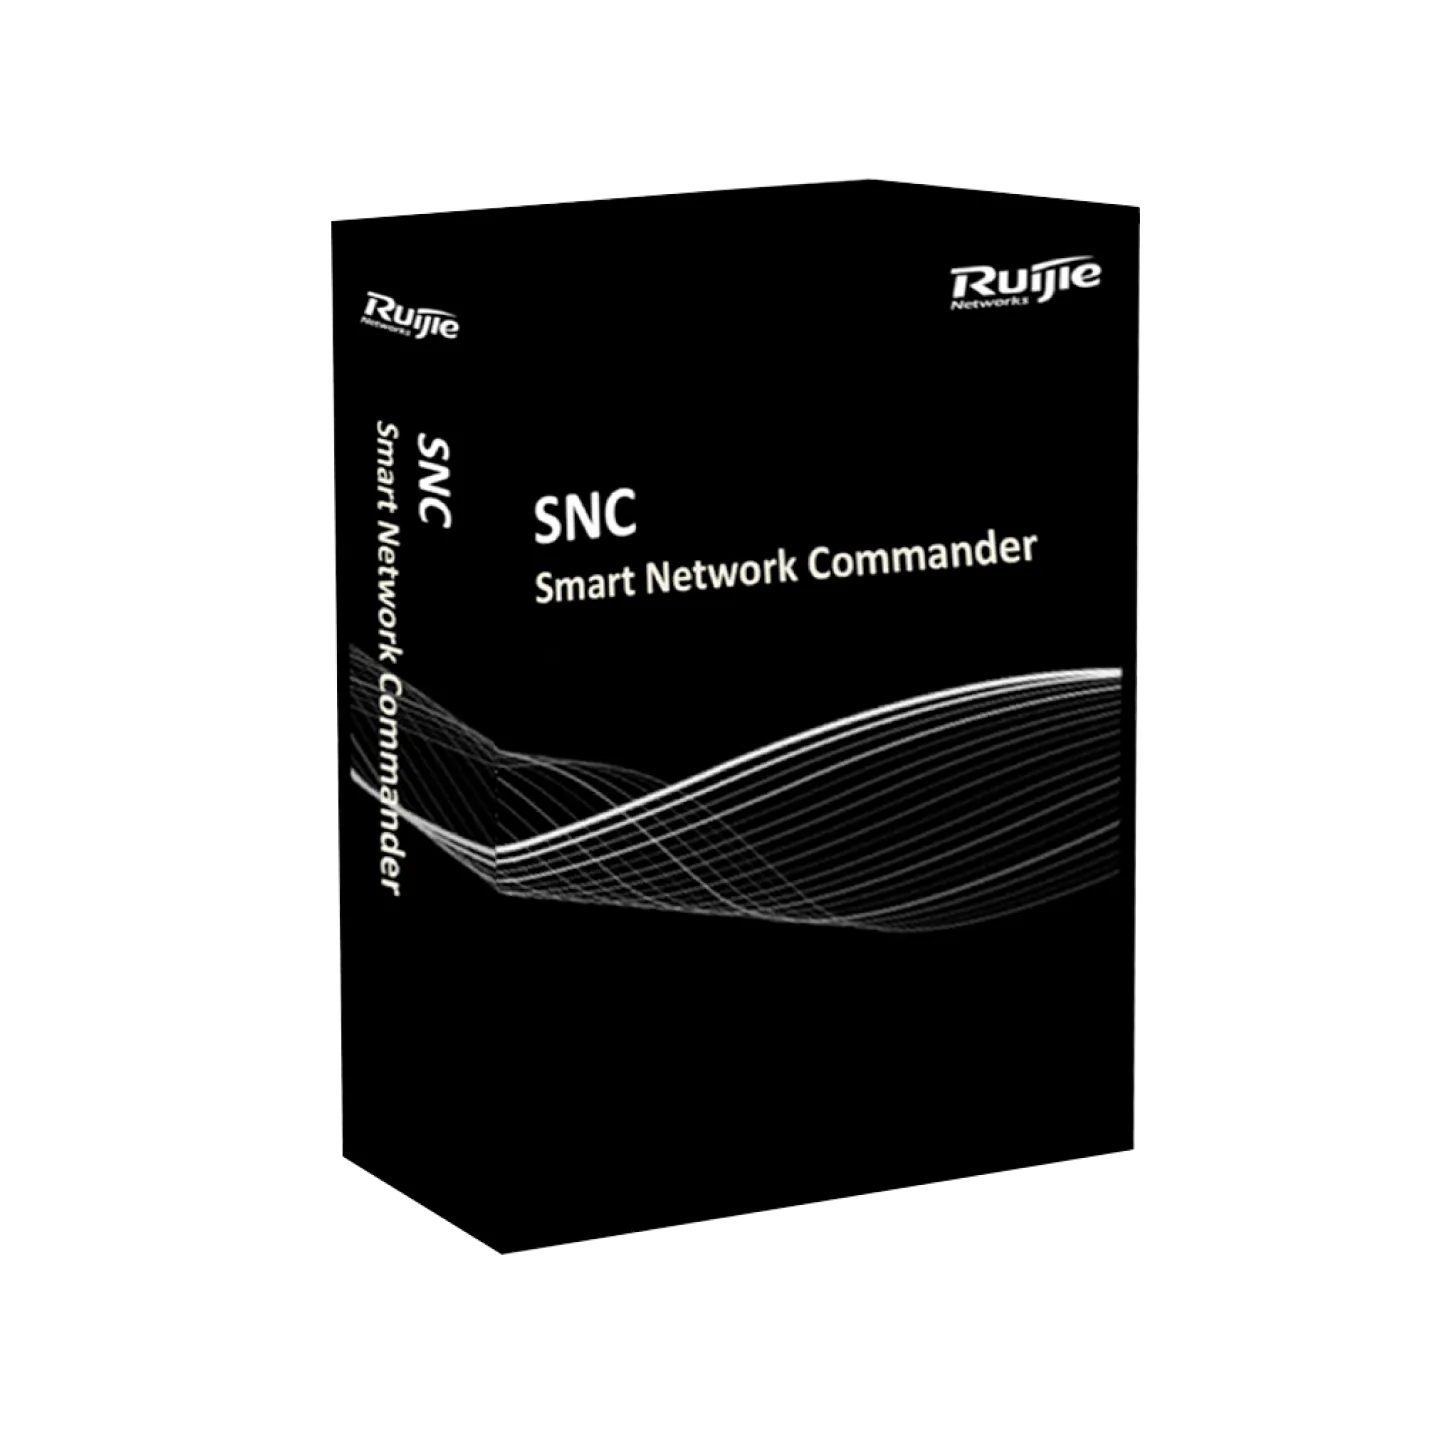 RG-SNC Network Management System